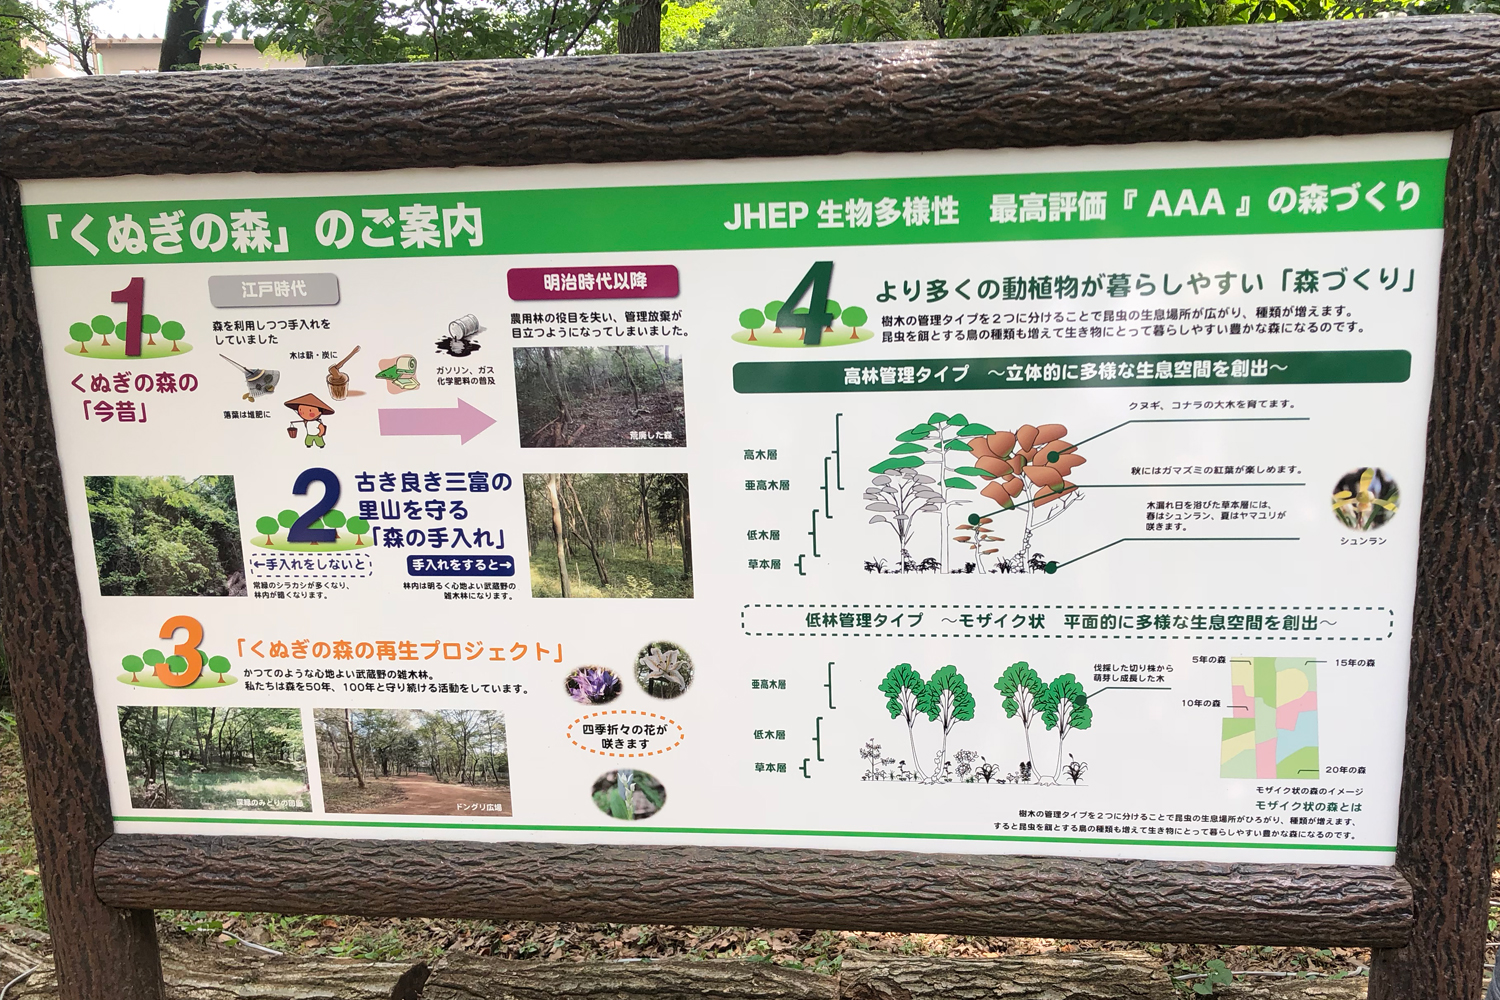 JHEP認証“AAA” の「くぬぎの森」